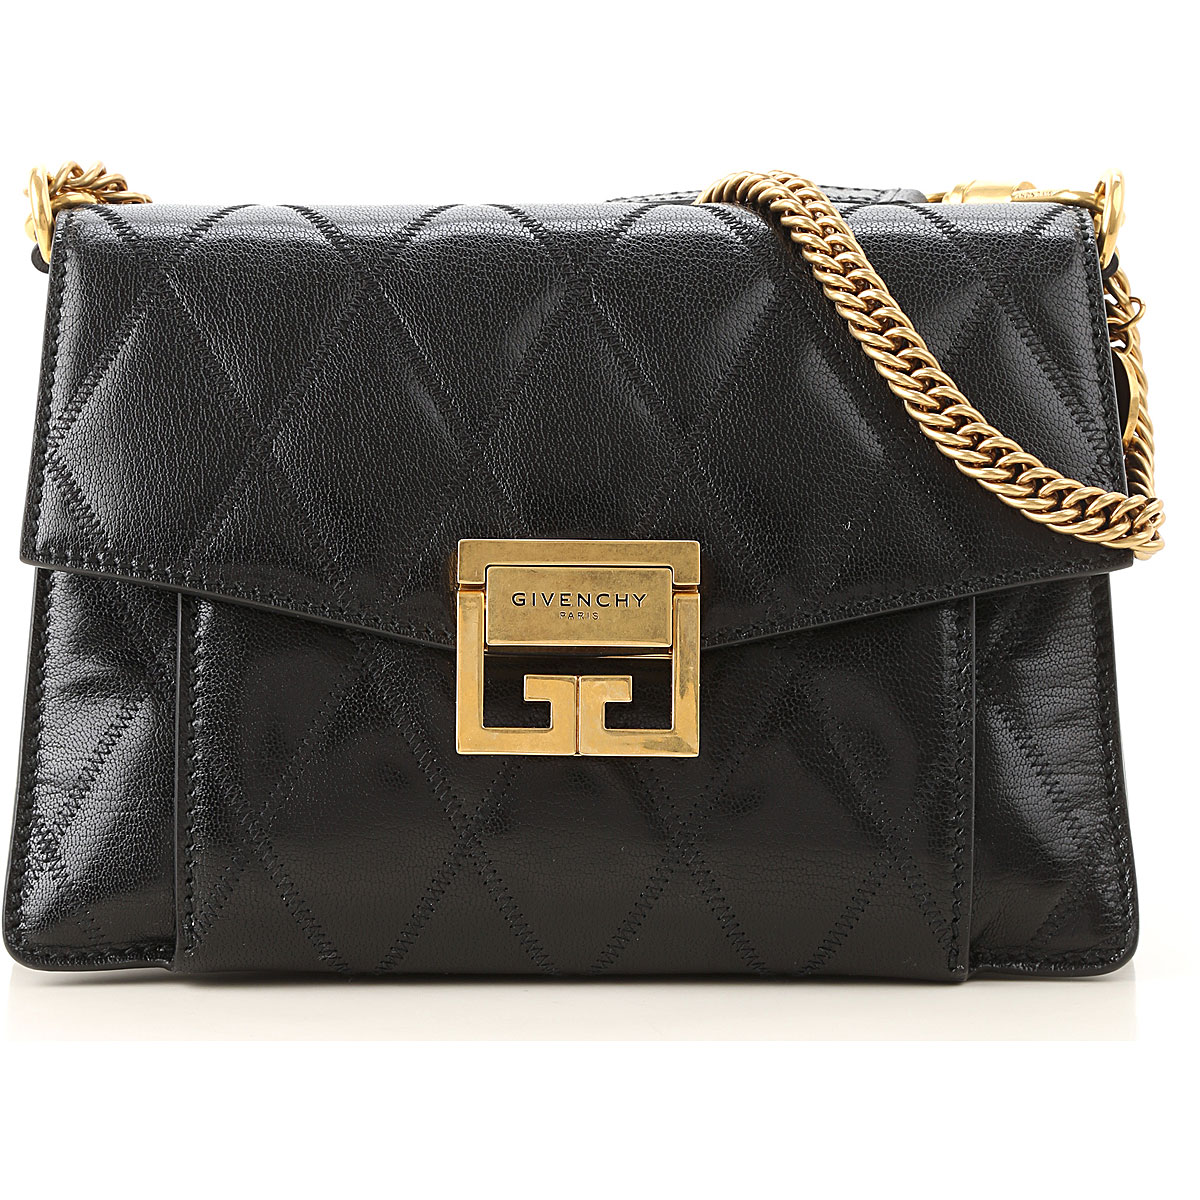 Handbags Givenchy, Style code: bb501cb08z-001-